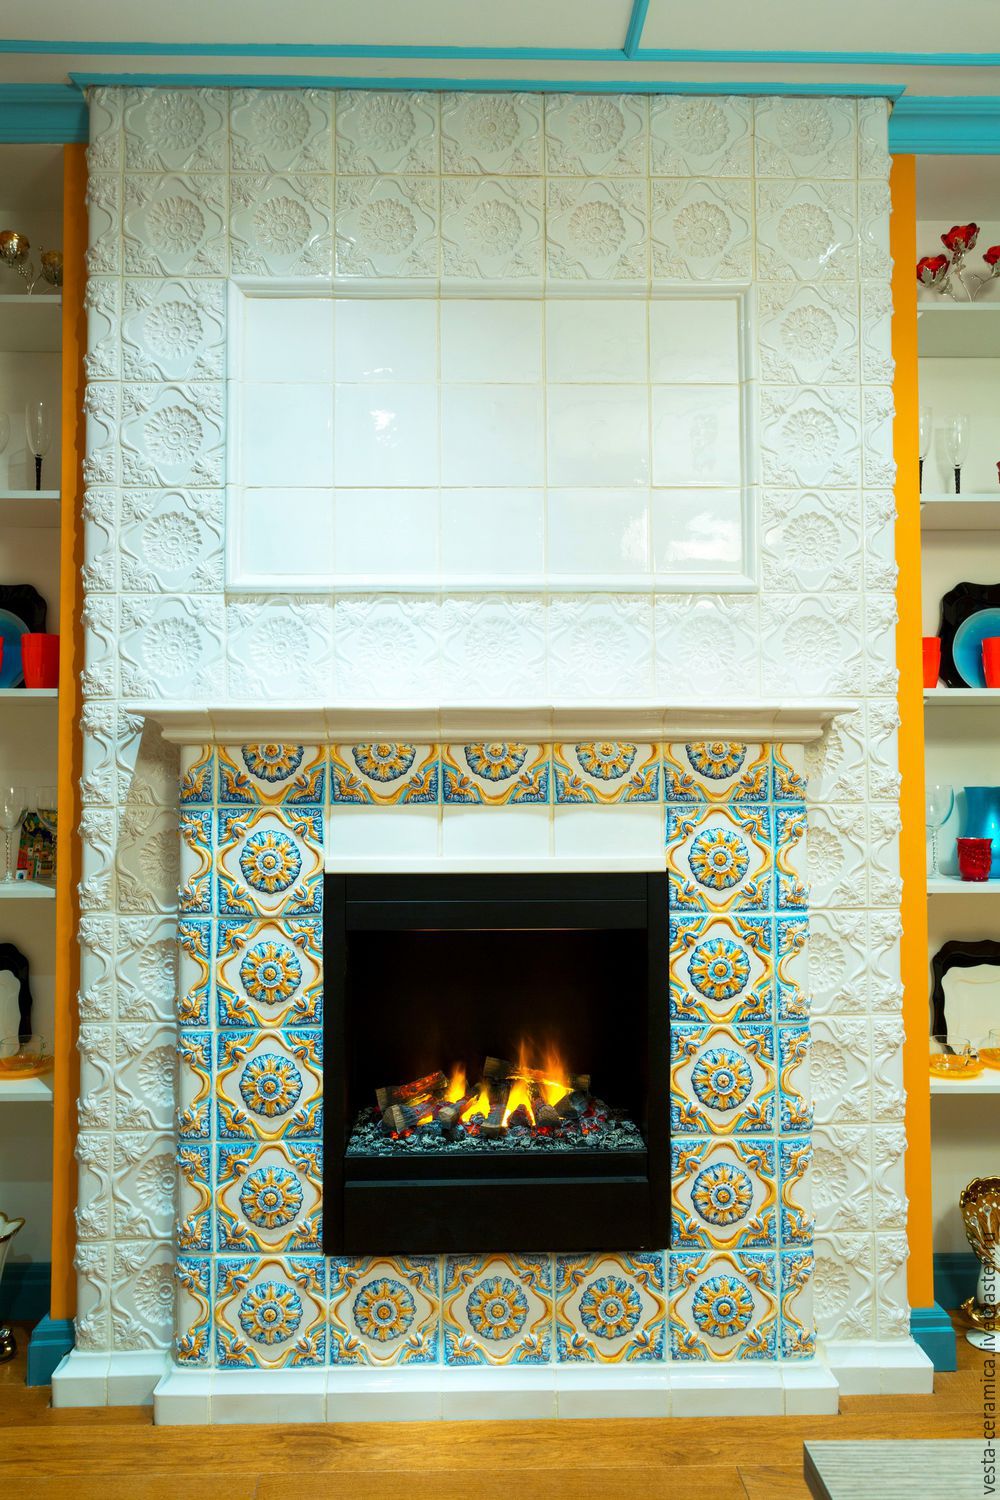 Fireplace Tile Design 2 New Tiled Fireplace